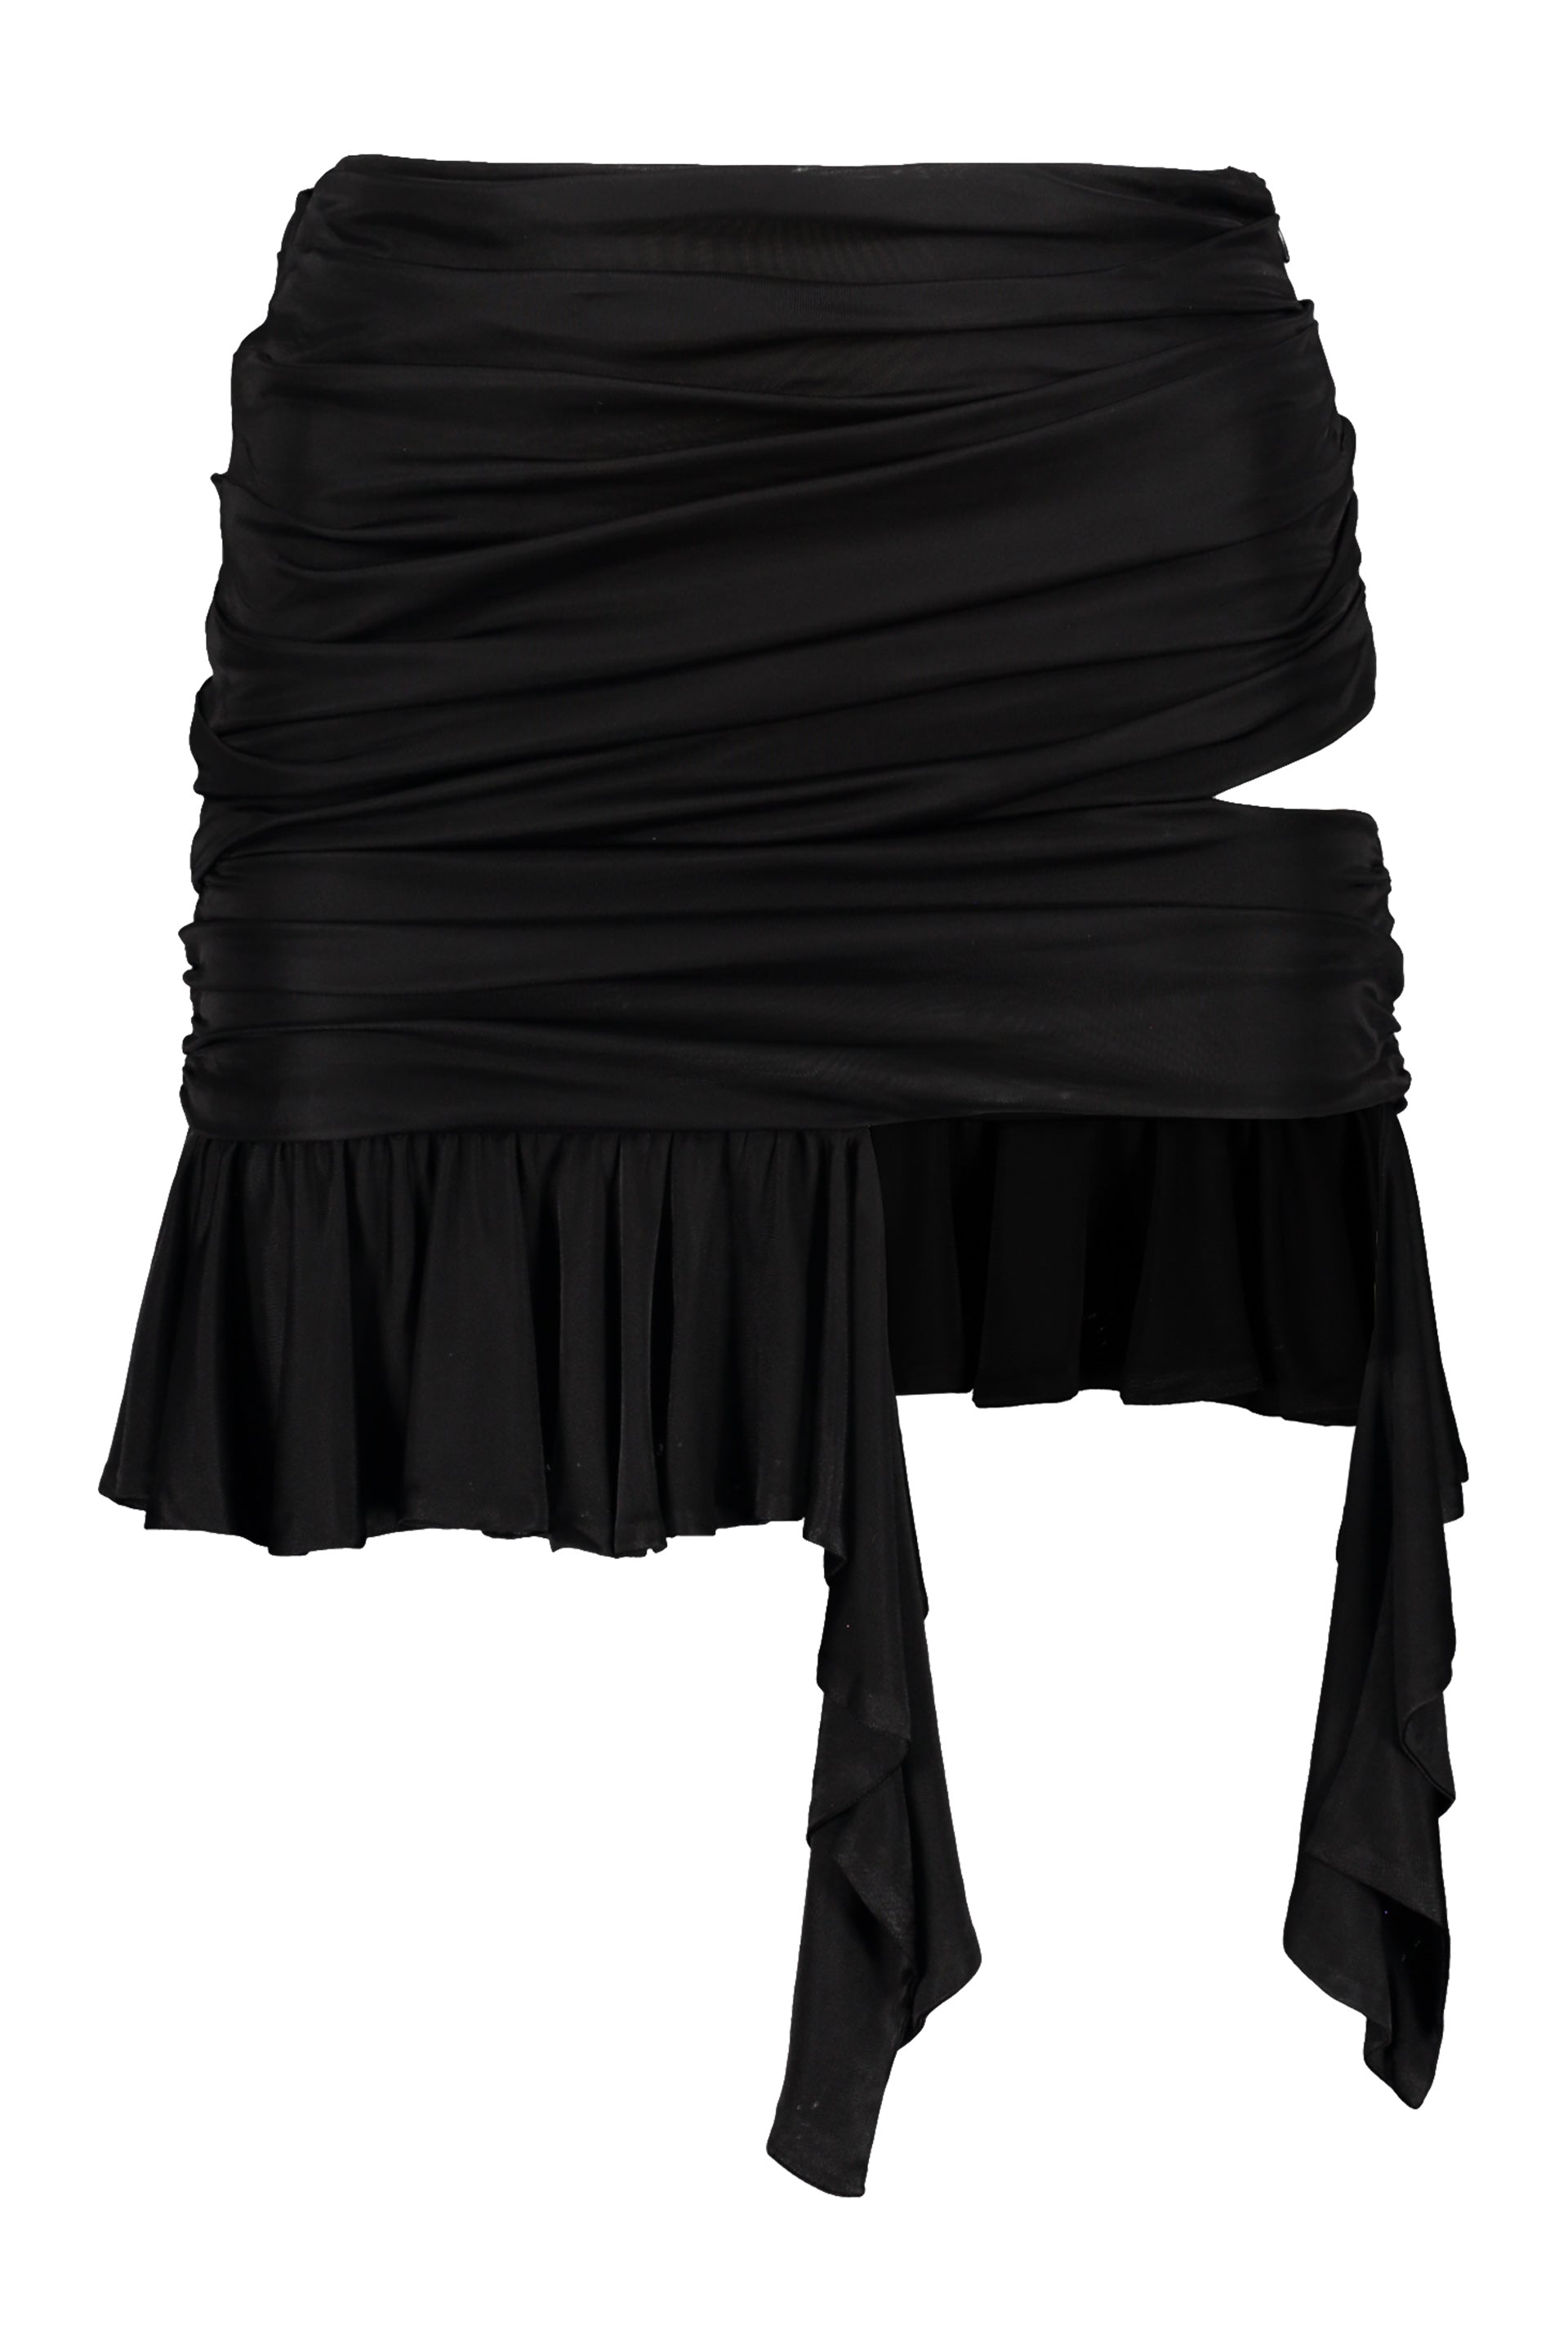 ANDREADAMO-OUTLET-SALE-Ruffled-mini-skirt-Kleider-Rocke-M-ARCHIVE-COLLECTION.jpg